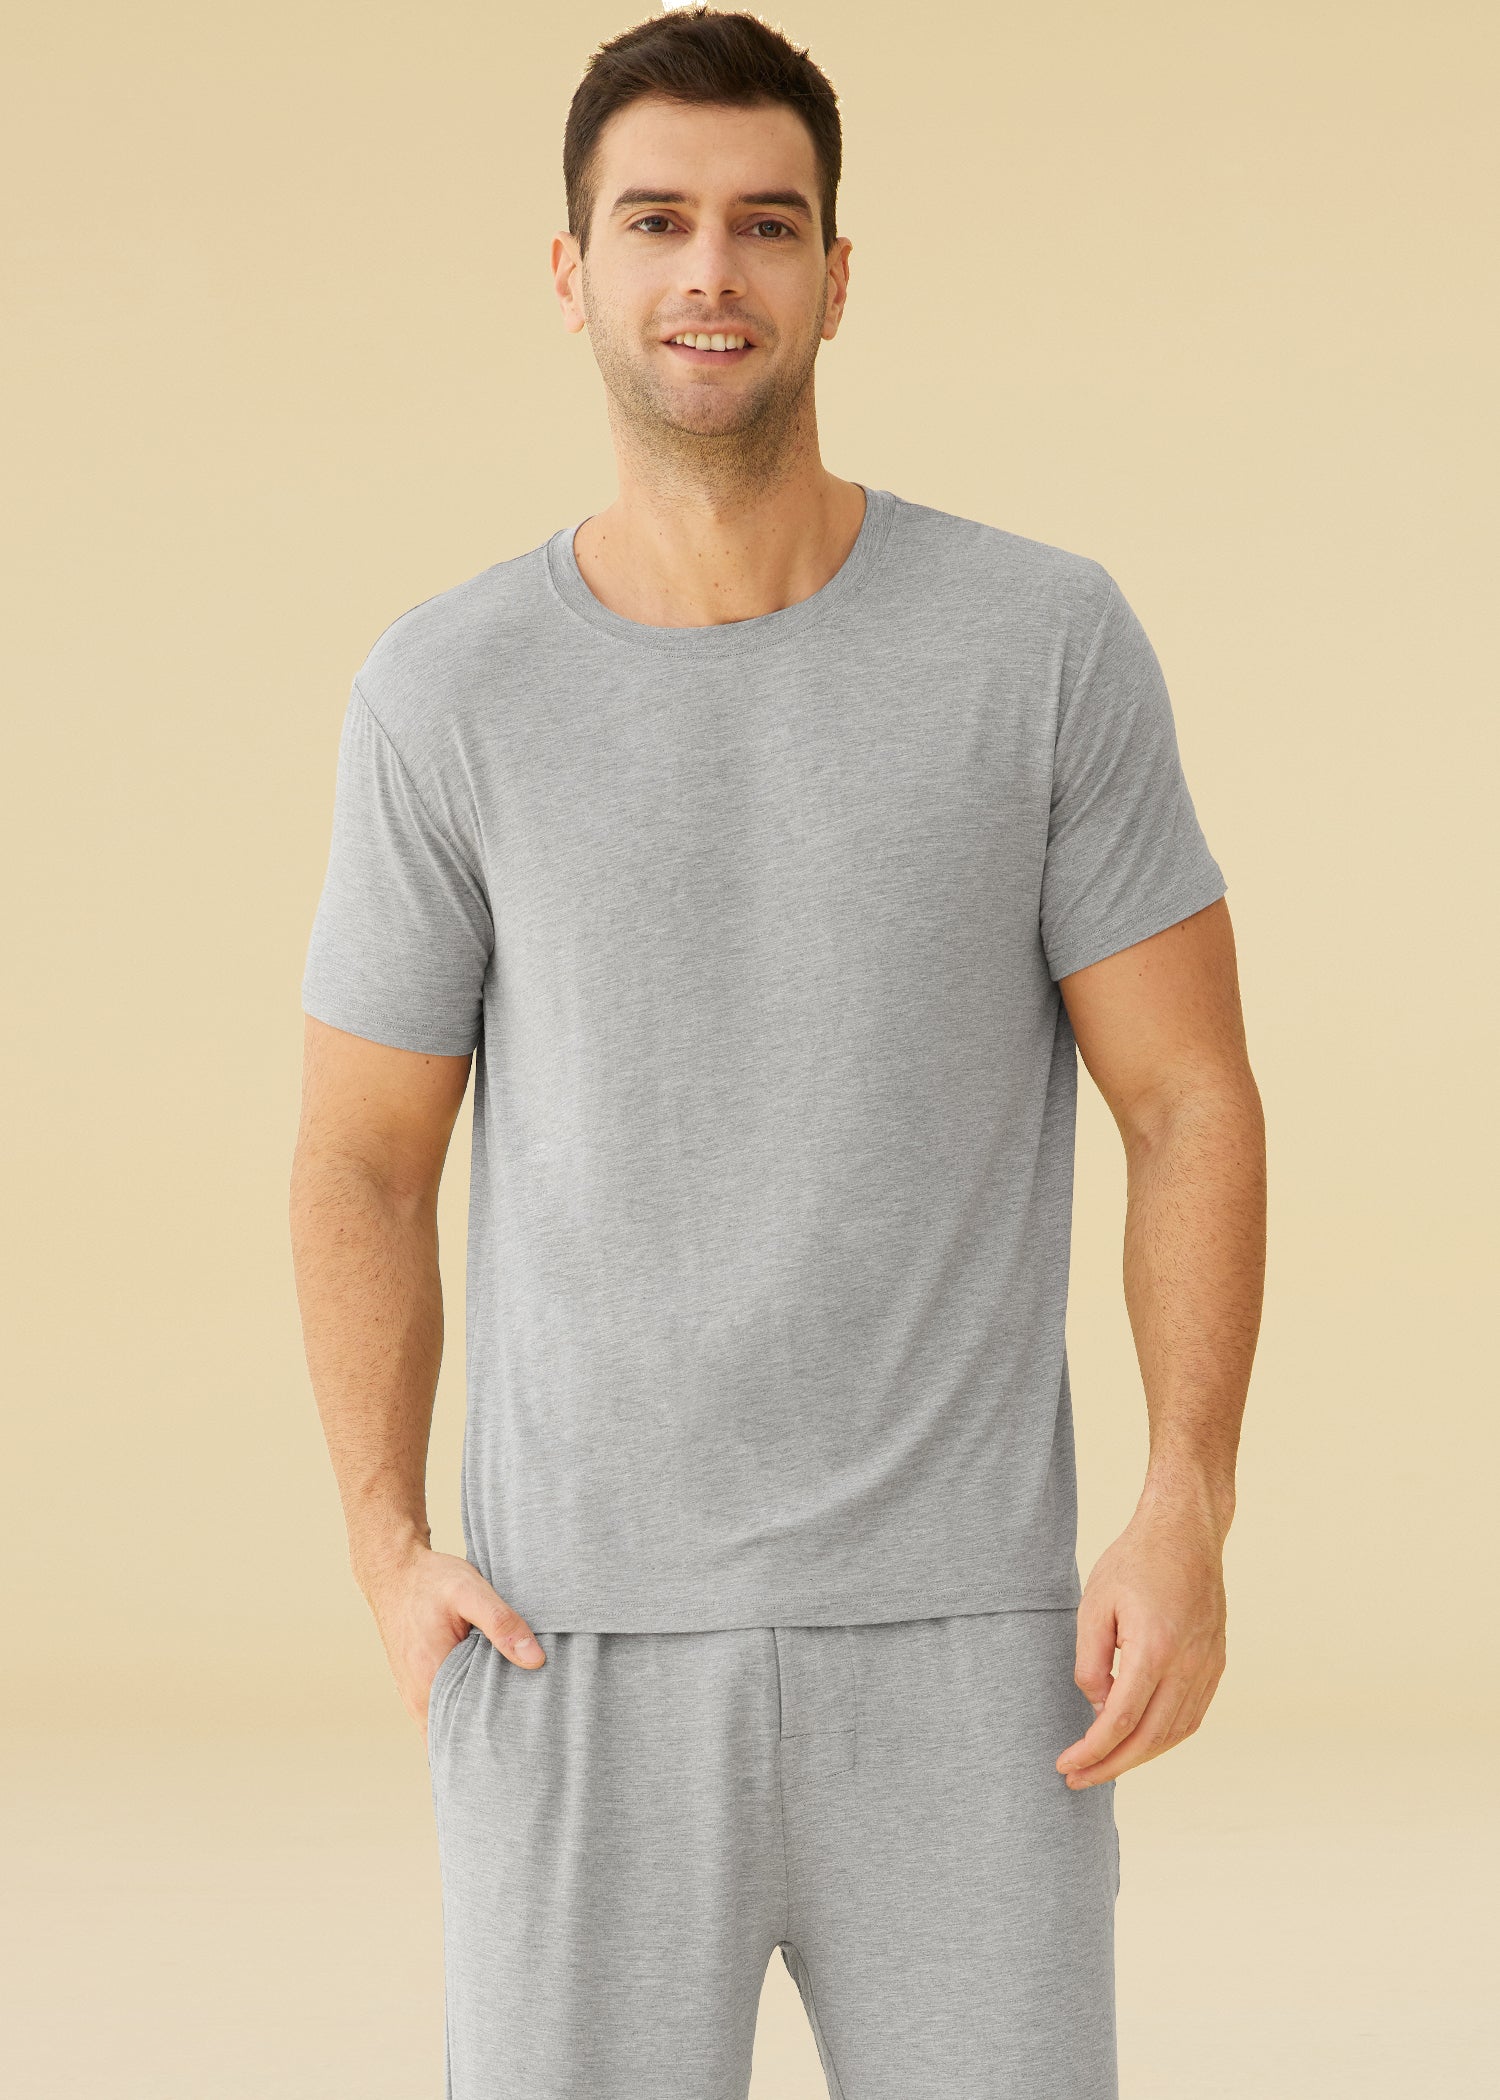 Men's Pajama Shorts Soft Bamboo Viscose Sleep Shorts - China Pajamas Set  and Chinese Nightwear for Men price